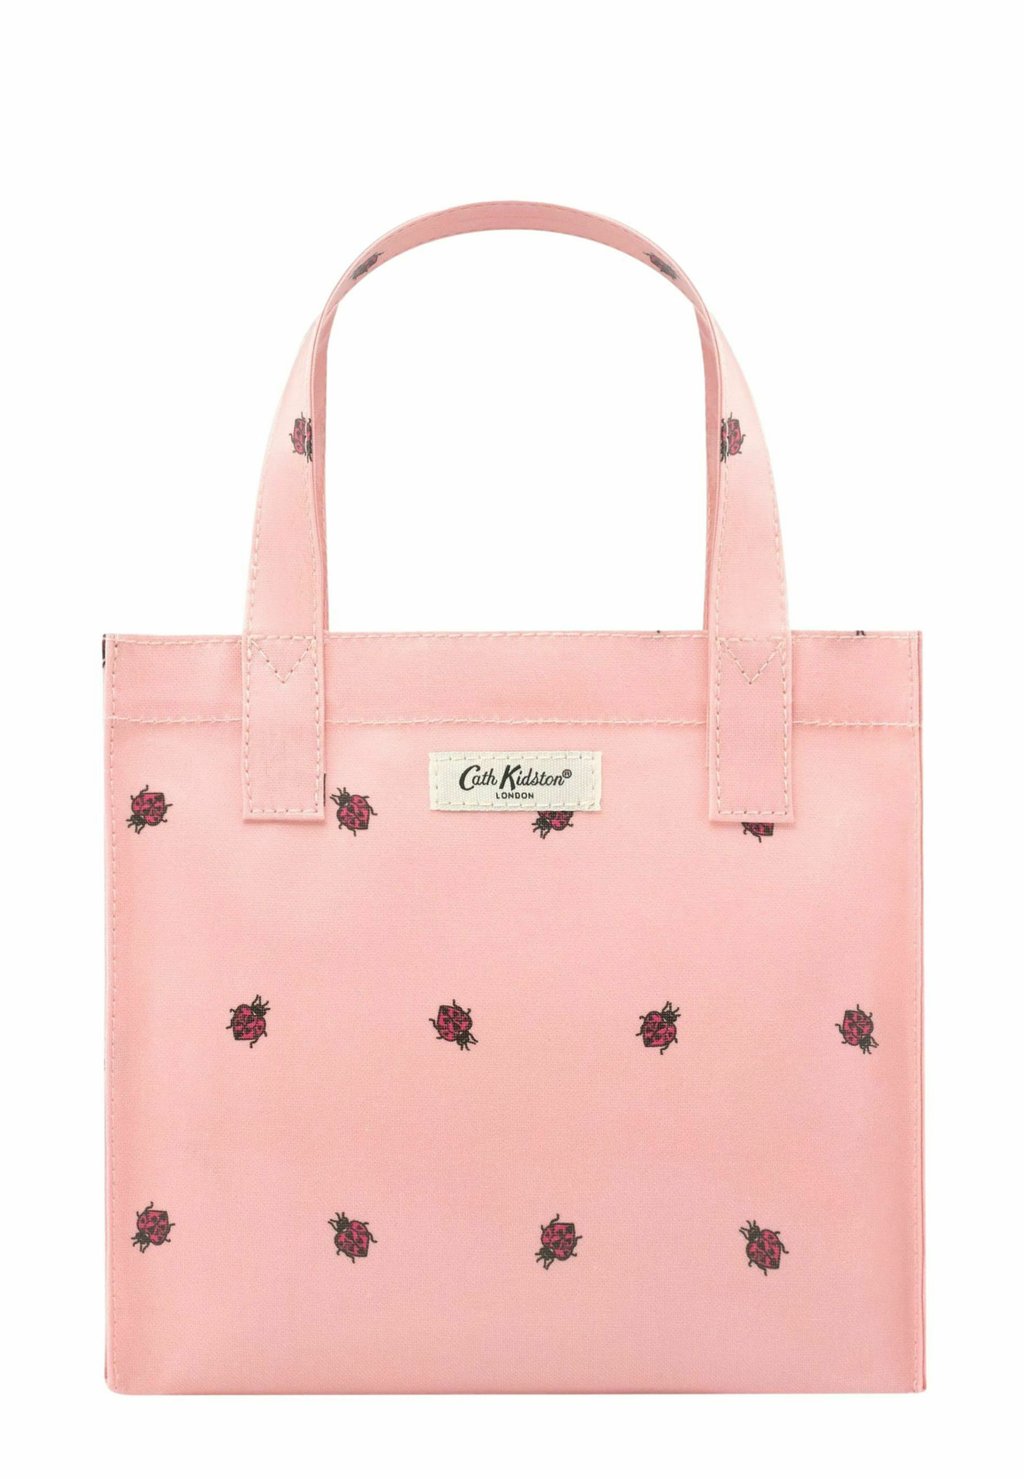 Сумочка Small Coated Regular Fit Cath Kidston, цвет pink ladybird print сумка для покупок large coated regular fit cath kidston цвет pink ladybird print